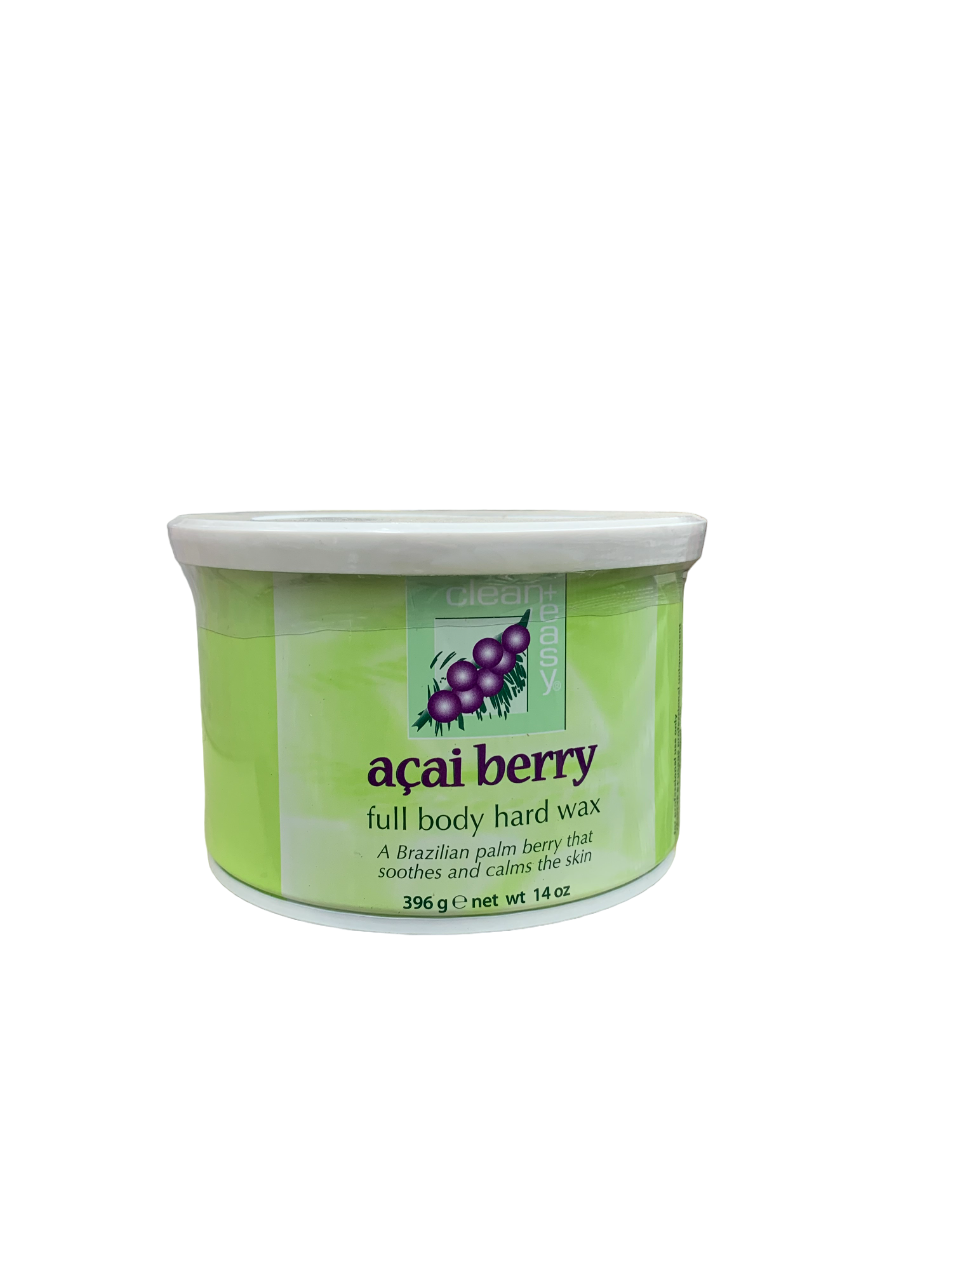 Clean + Easy Acai Berry Full Body Hard Wax